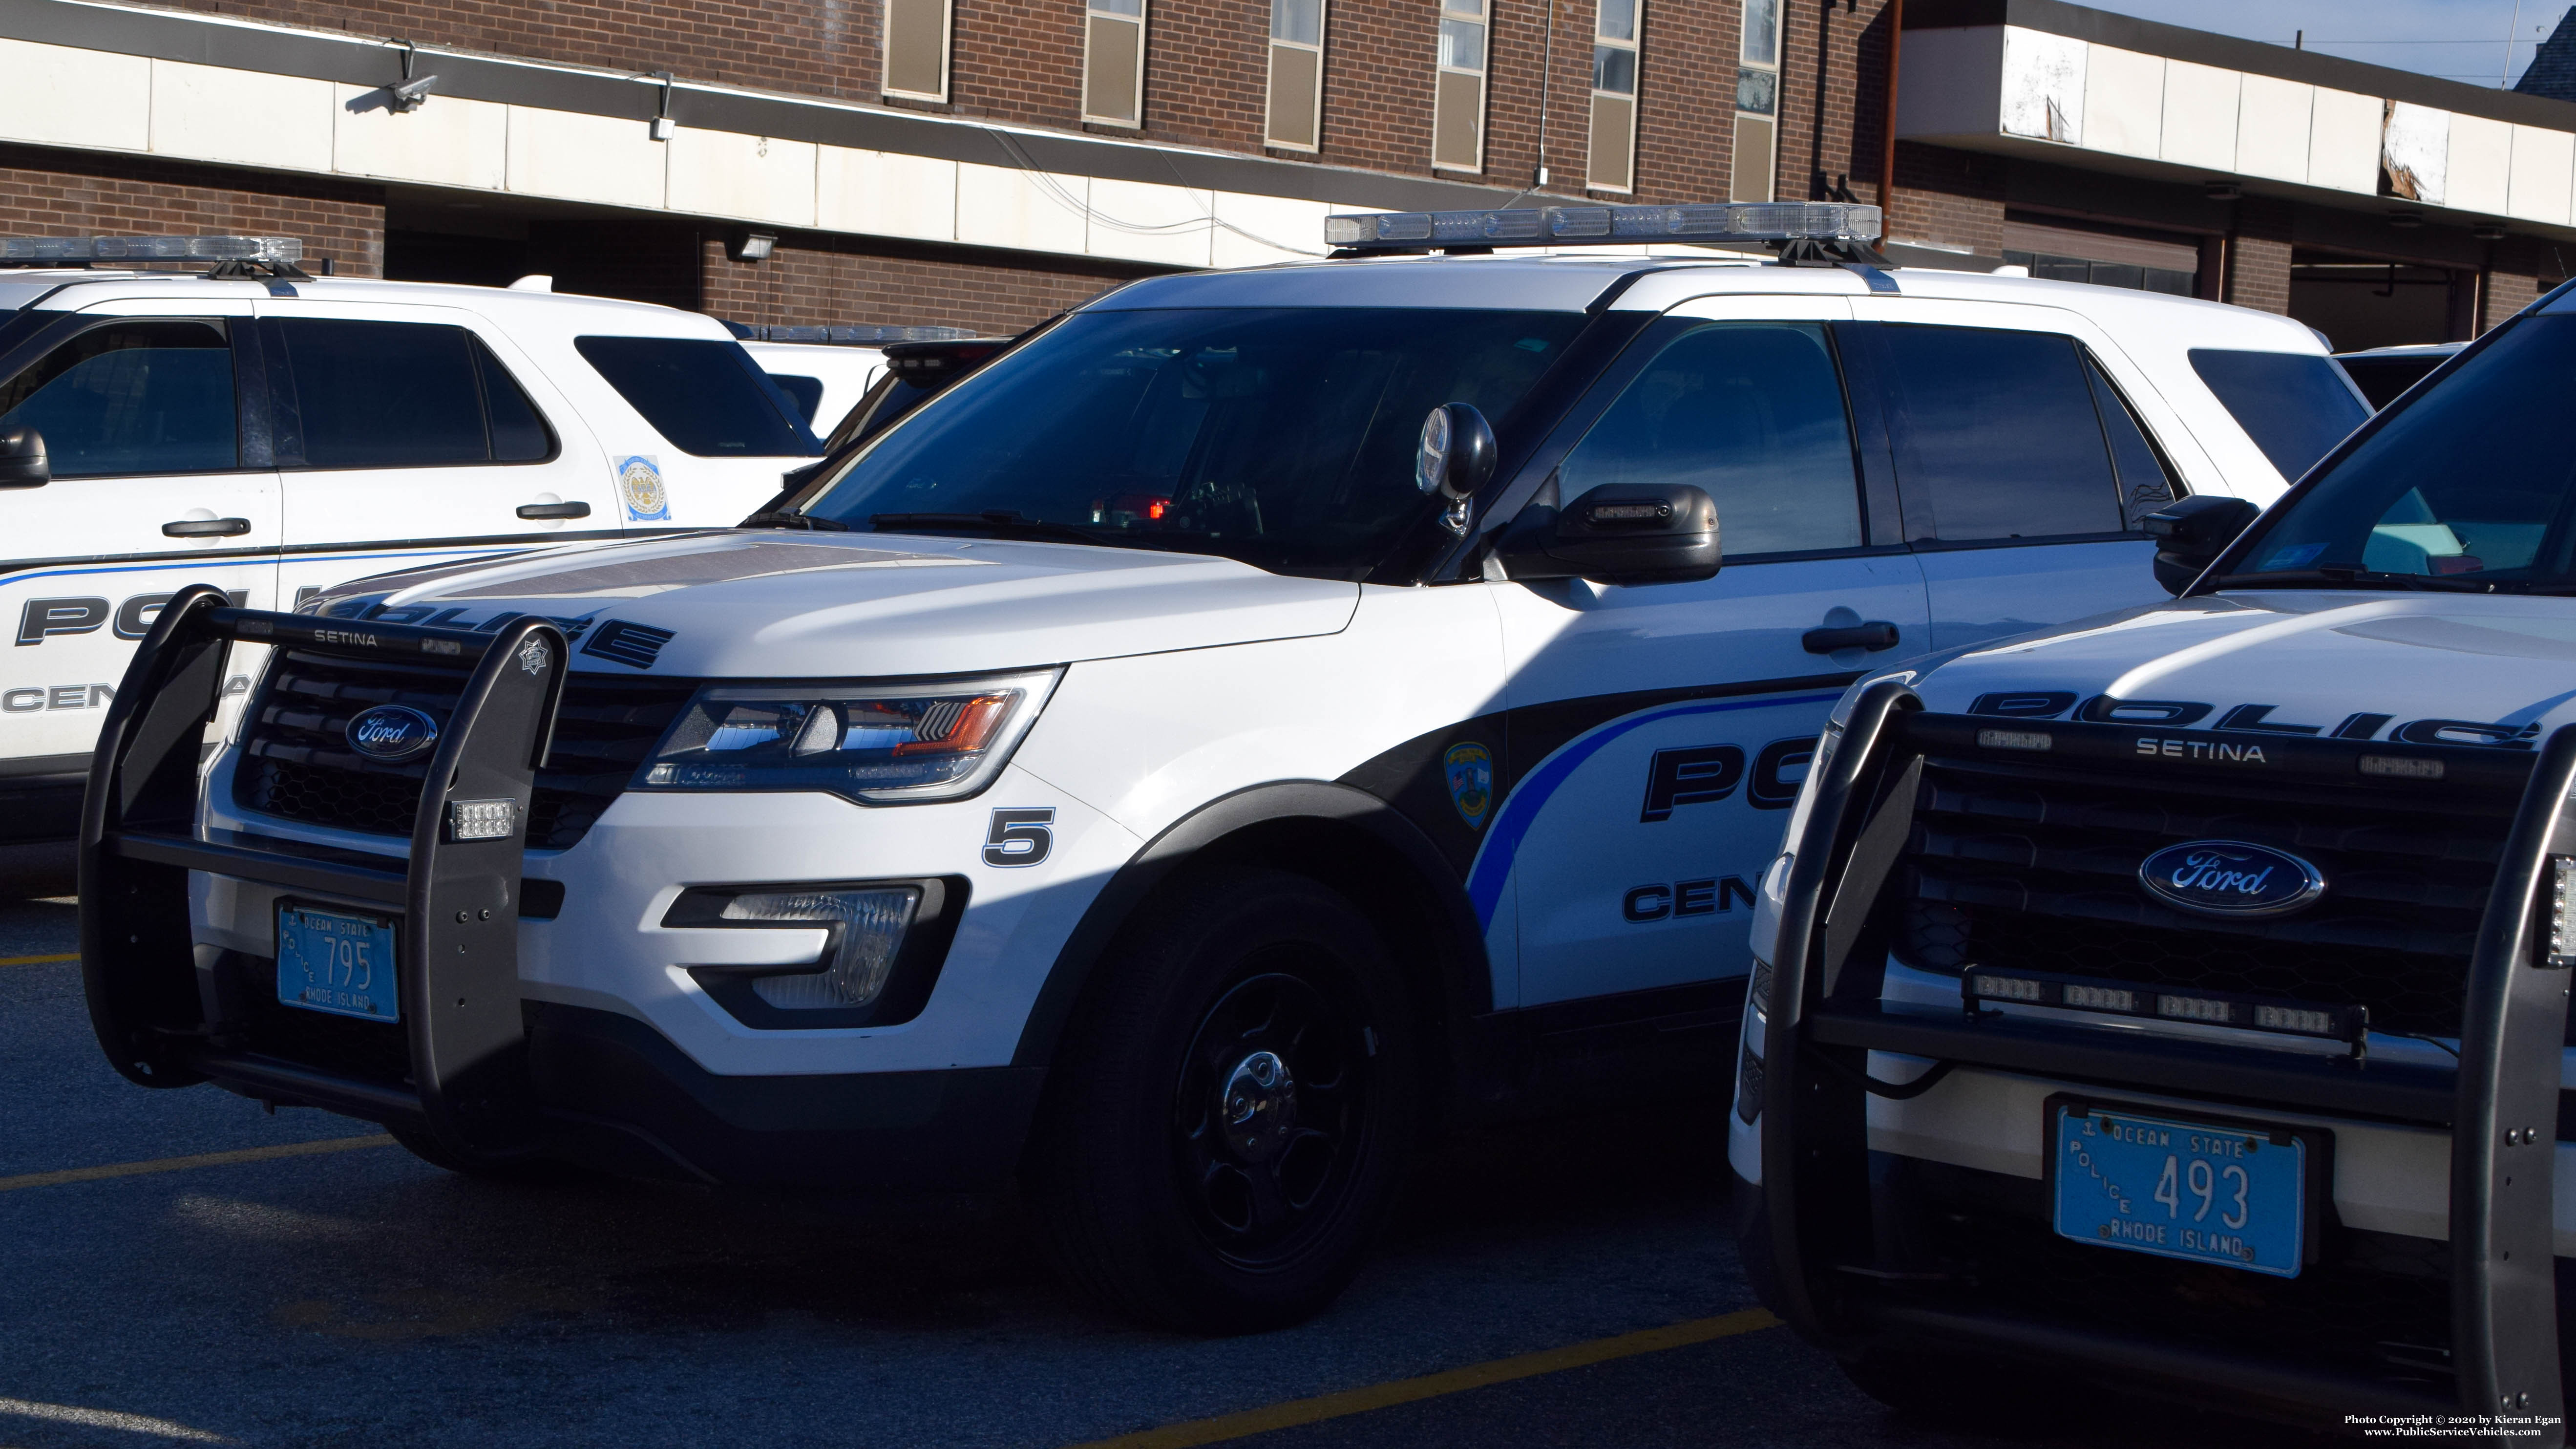 A photo  of Central Falls Police
            Patrol Car 5, a 2019 Ford Police Interceptor Utility             taken by Kieran Egan